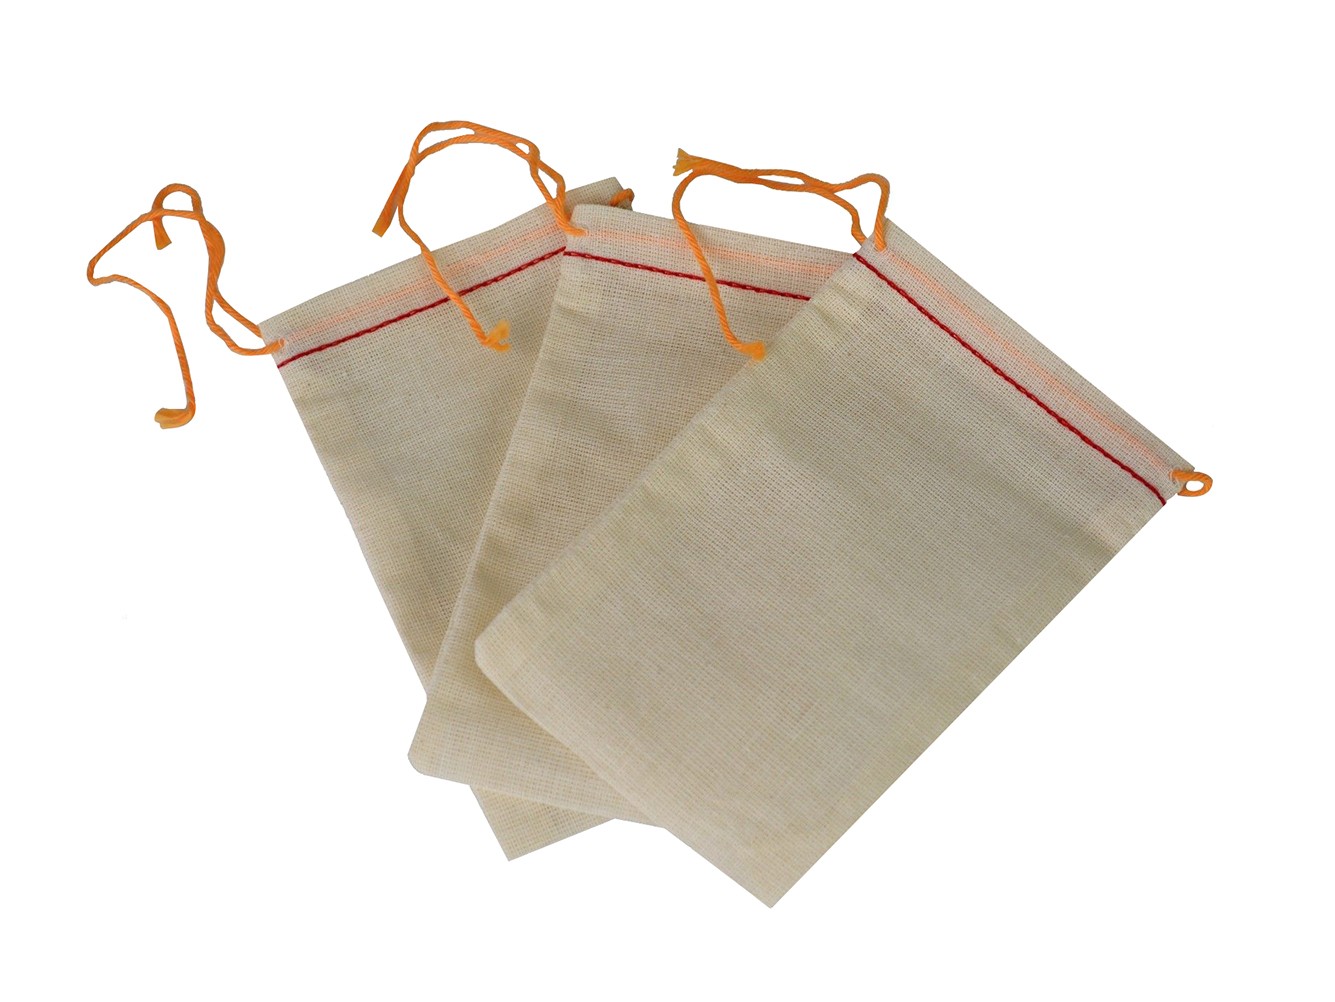 Pack of 3 Cloth Drawstring Storage Bags - 5" x 3"